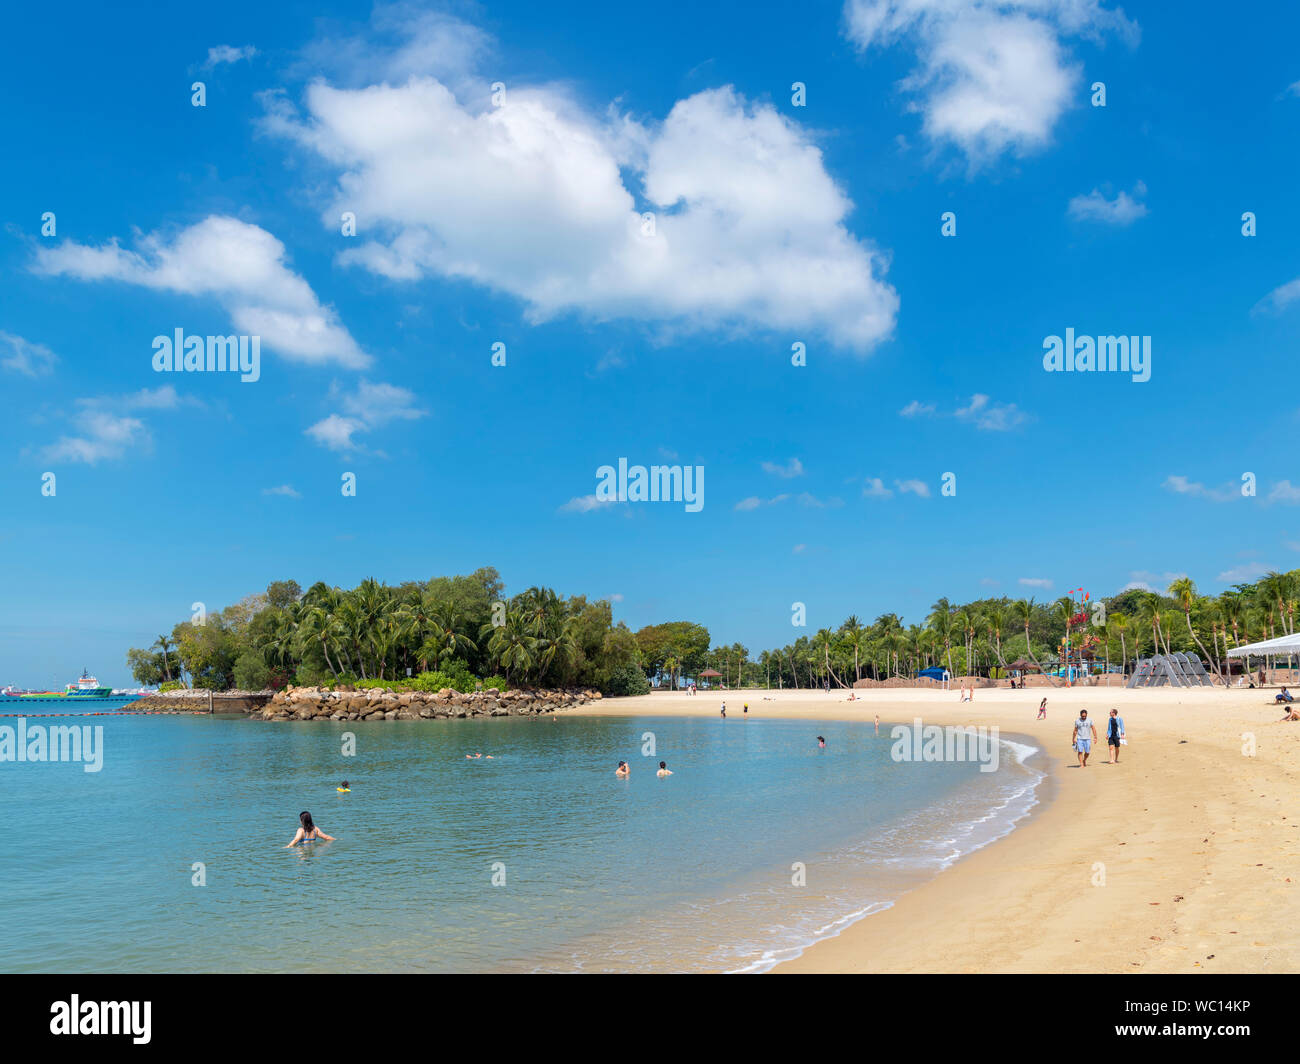 Palawan Beach sull'Isola di Sentosa, Singapore Foto Stock